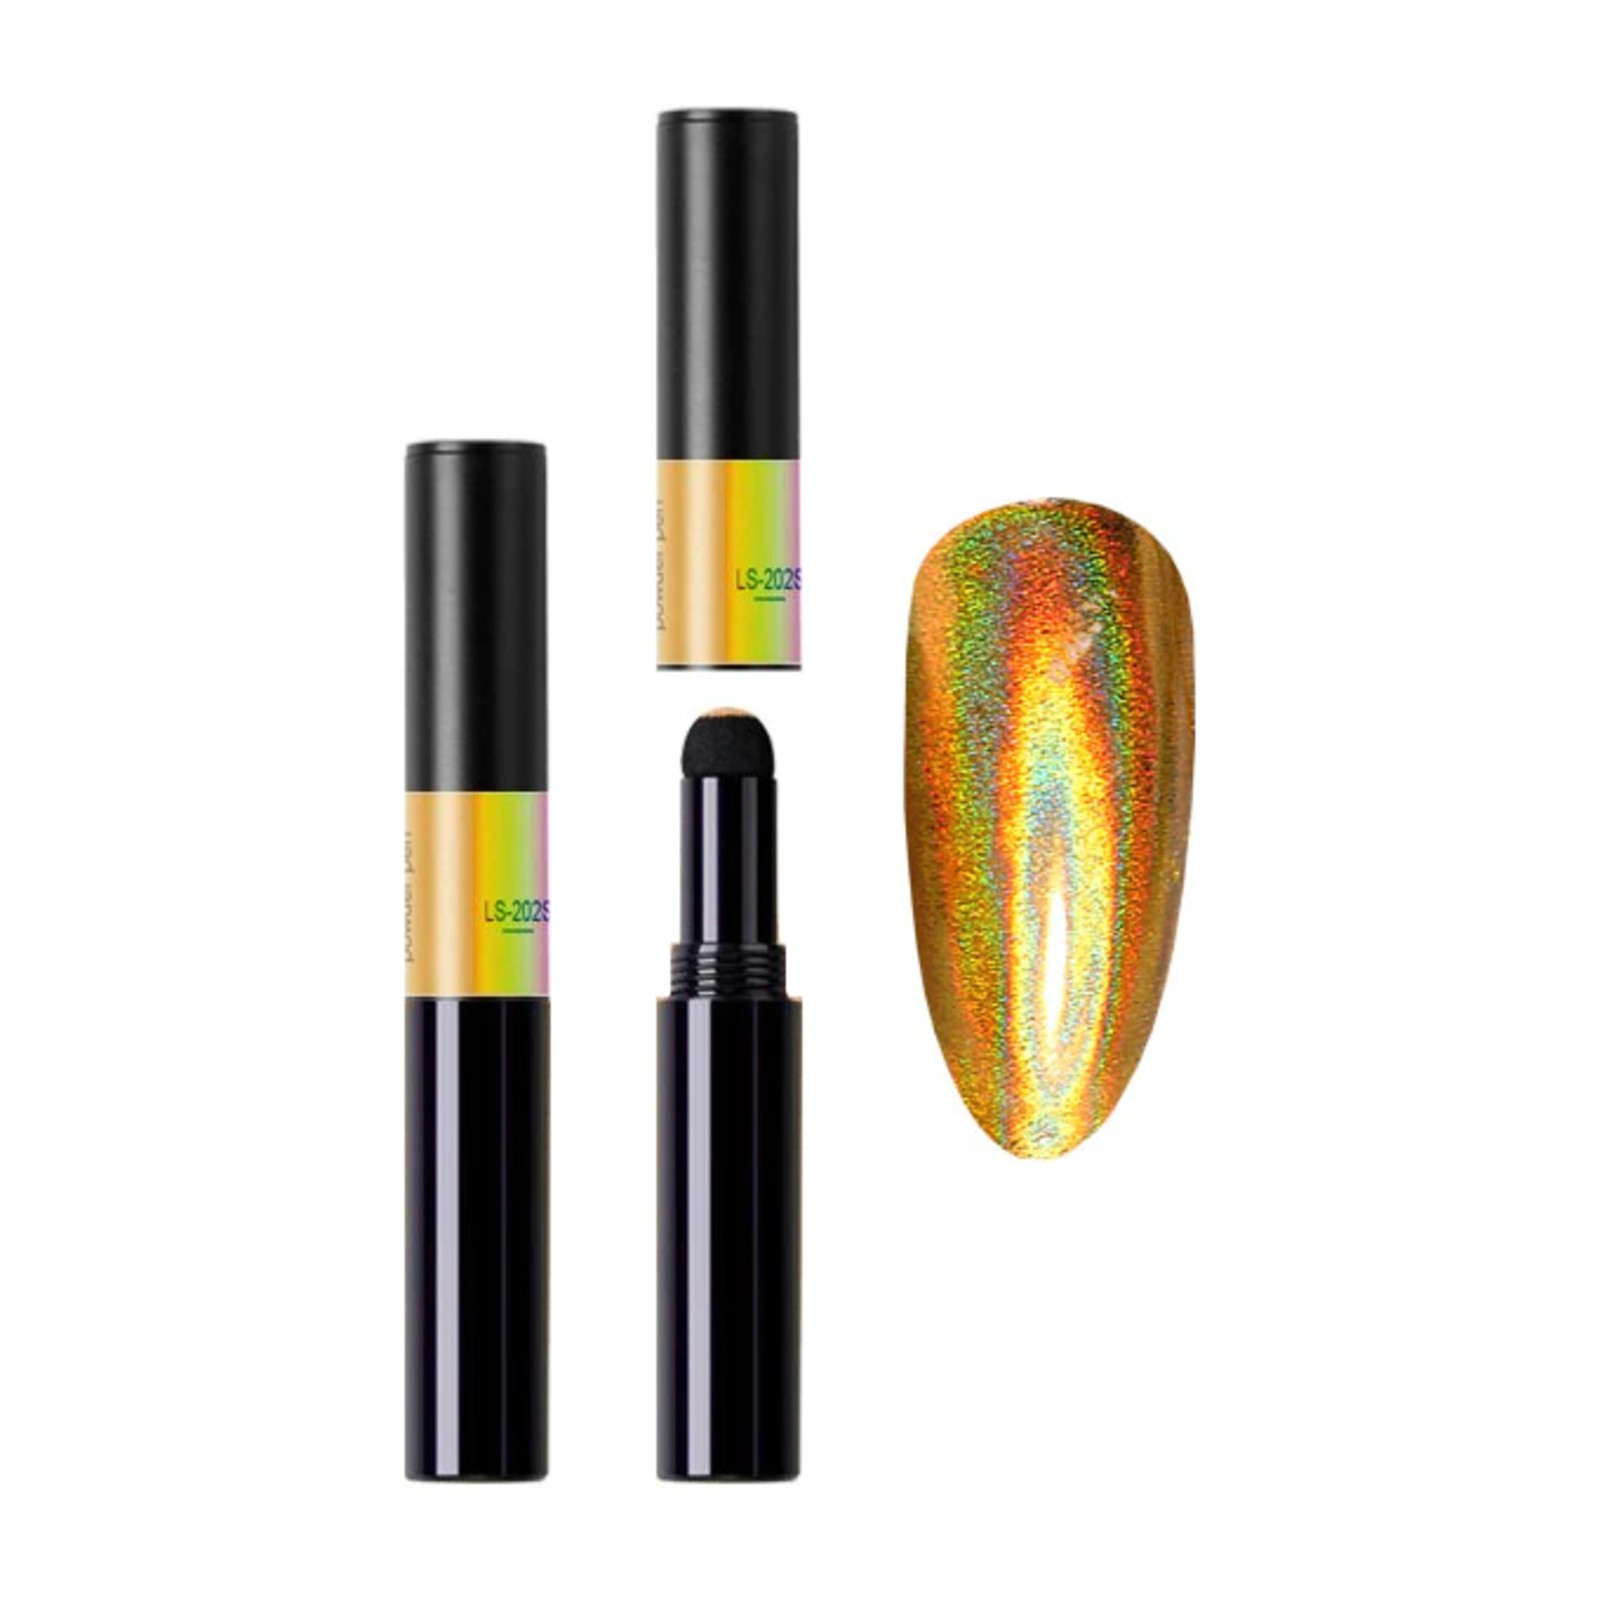 Venalisa -  Magic Powder Pen -  LS-202S zlato